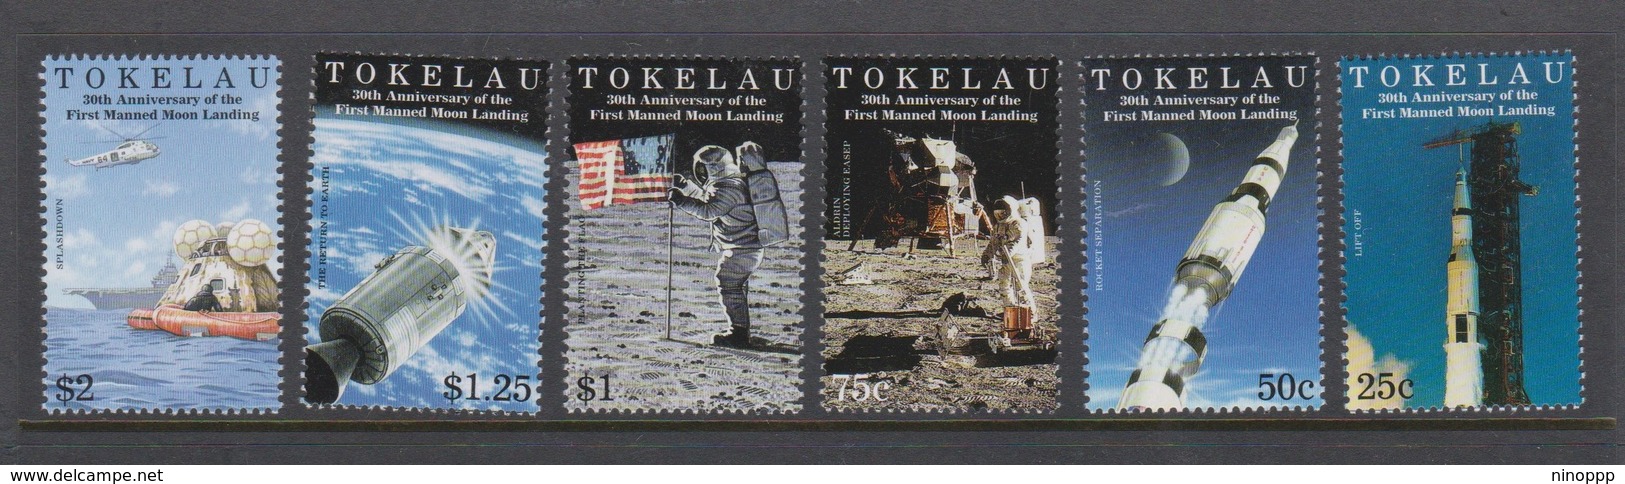 Tokelau SG 295-300 1999 First Manned Moon Landing 30th Anniversary,mint Never Hinged - Tokelau